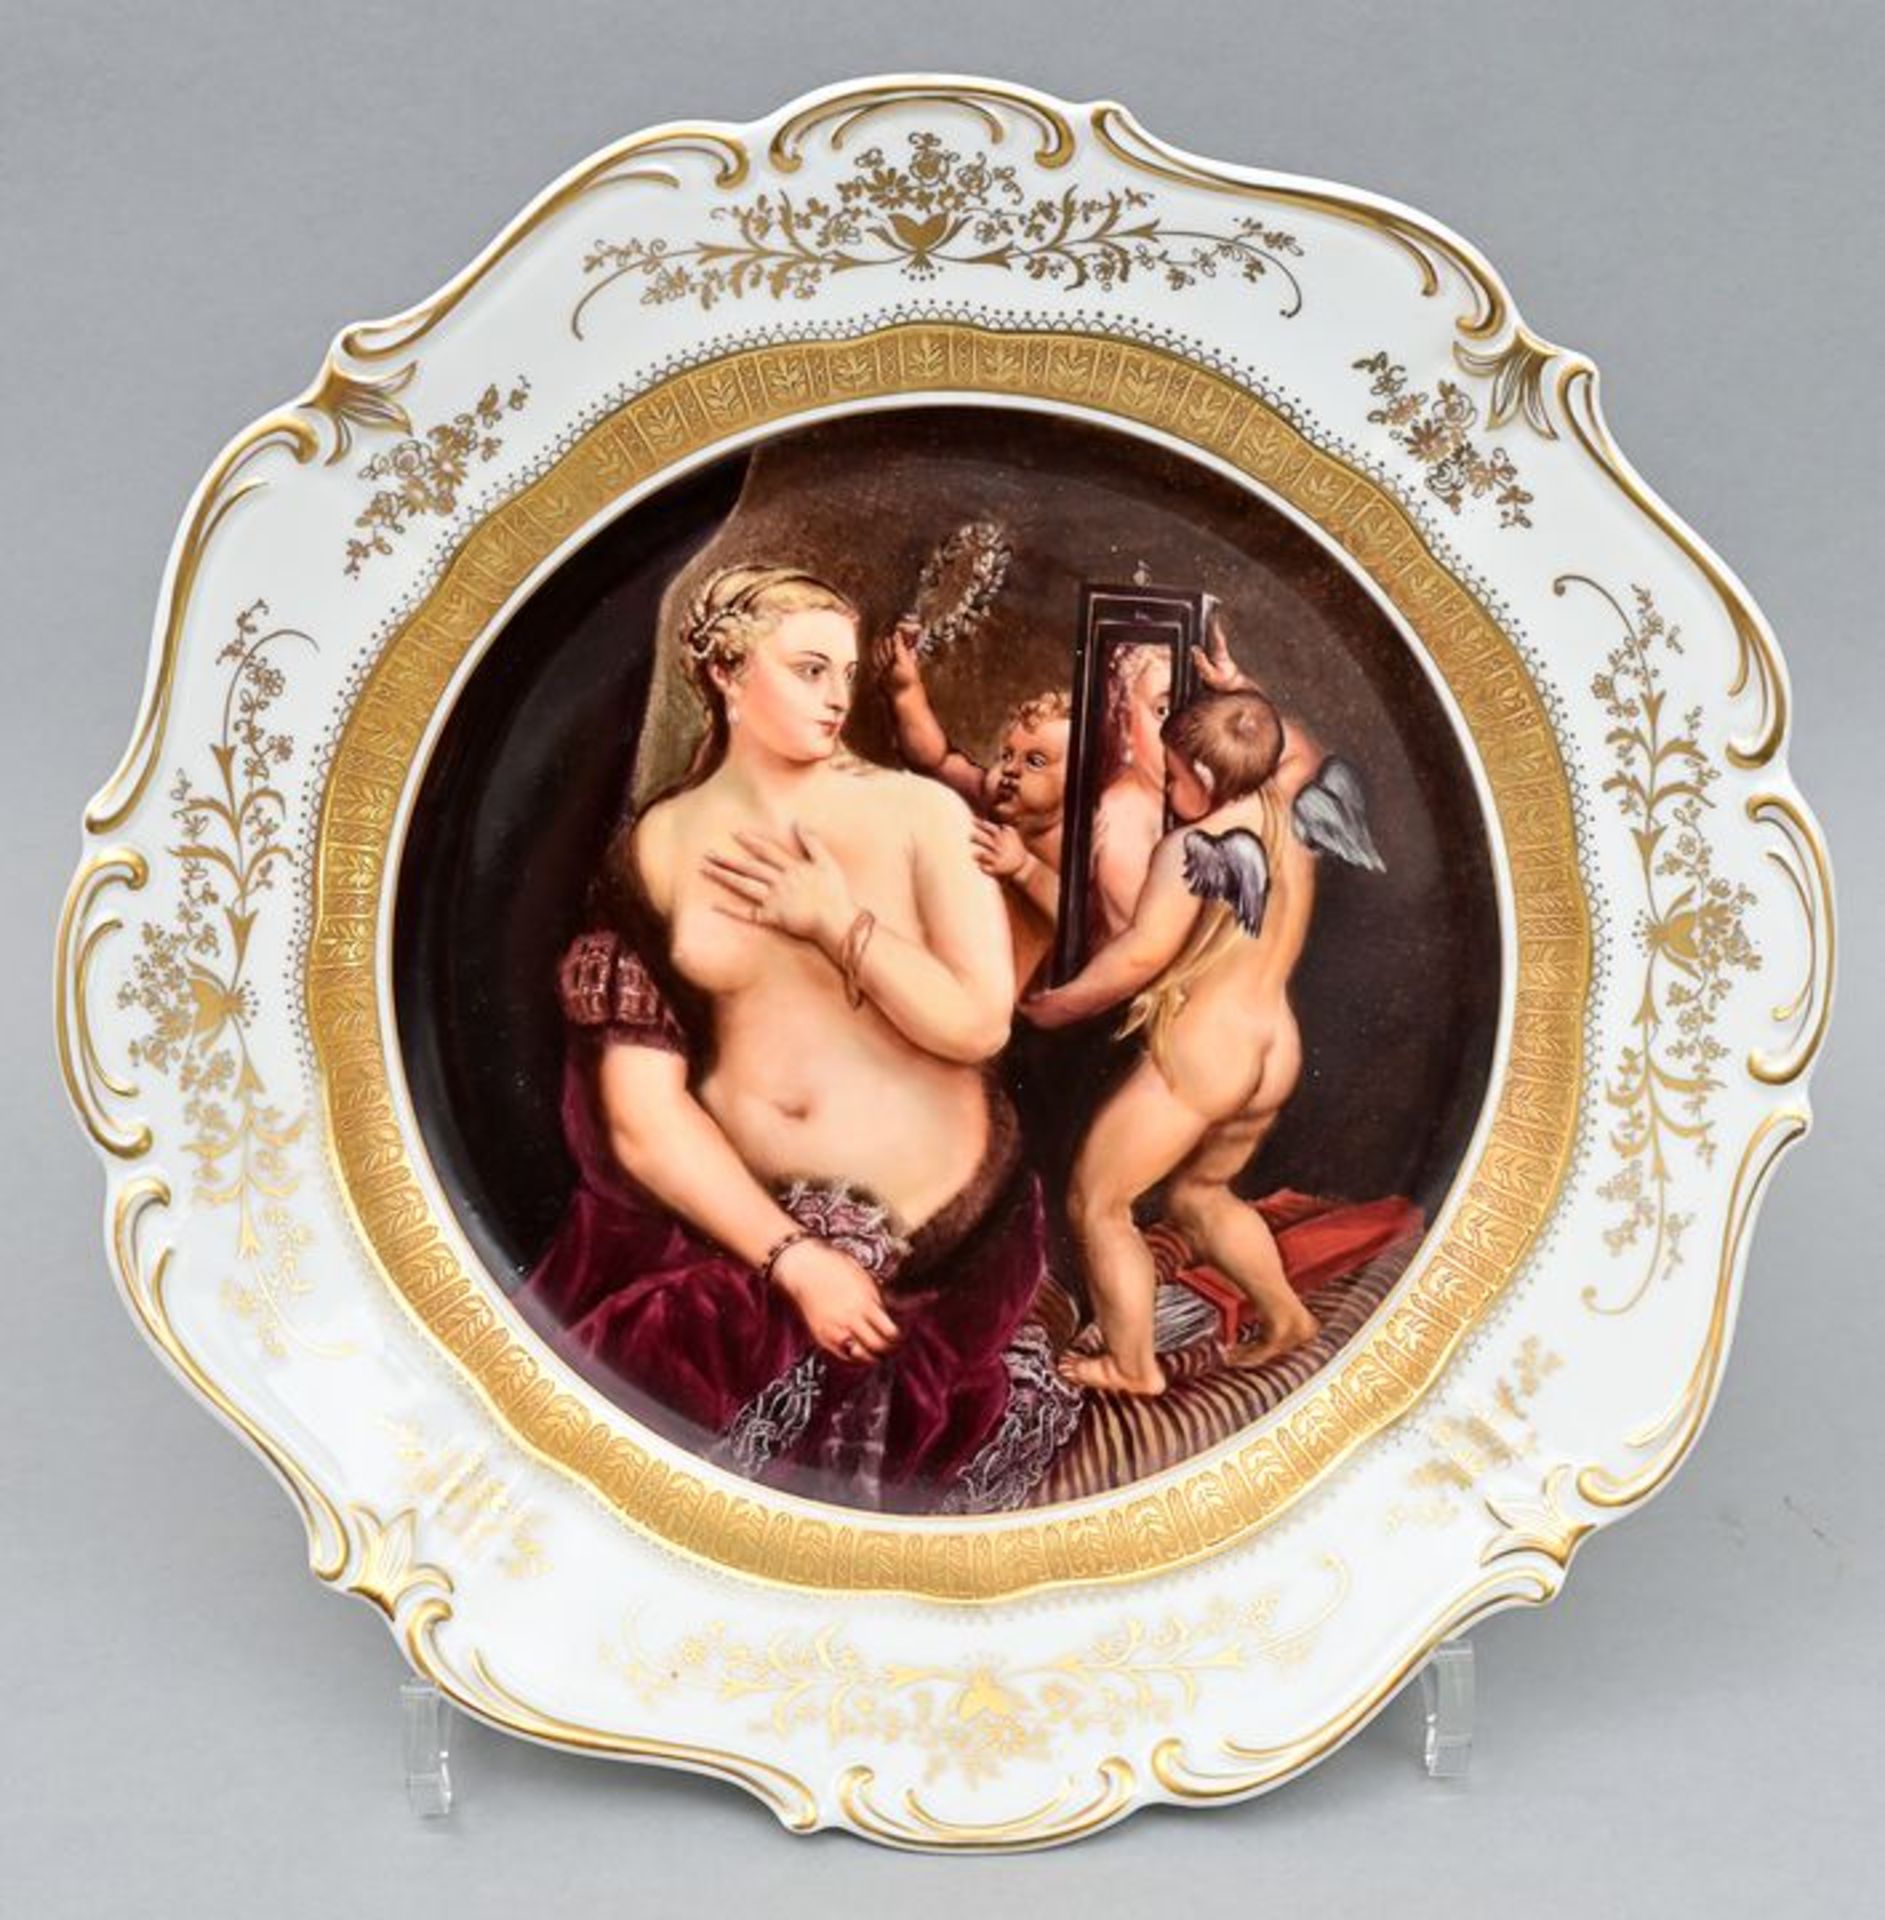 Bildteller Tizian/ plate porcelain